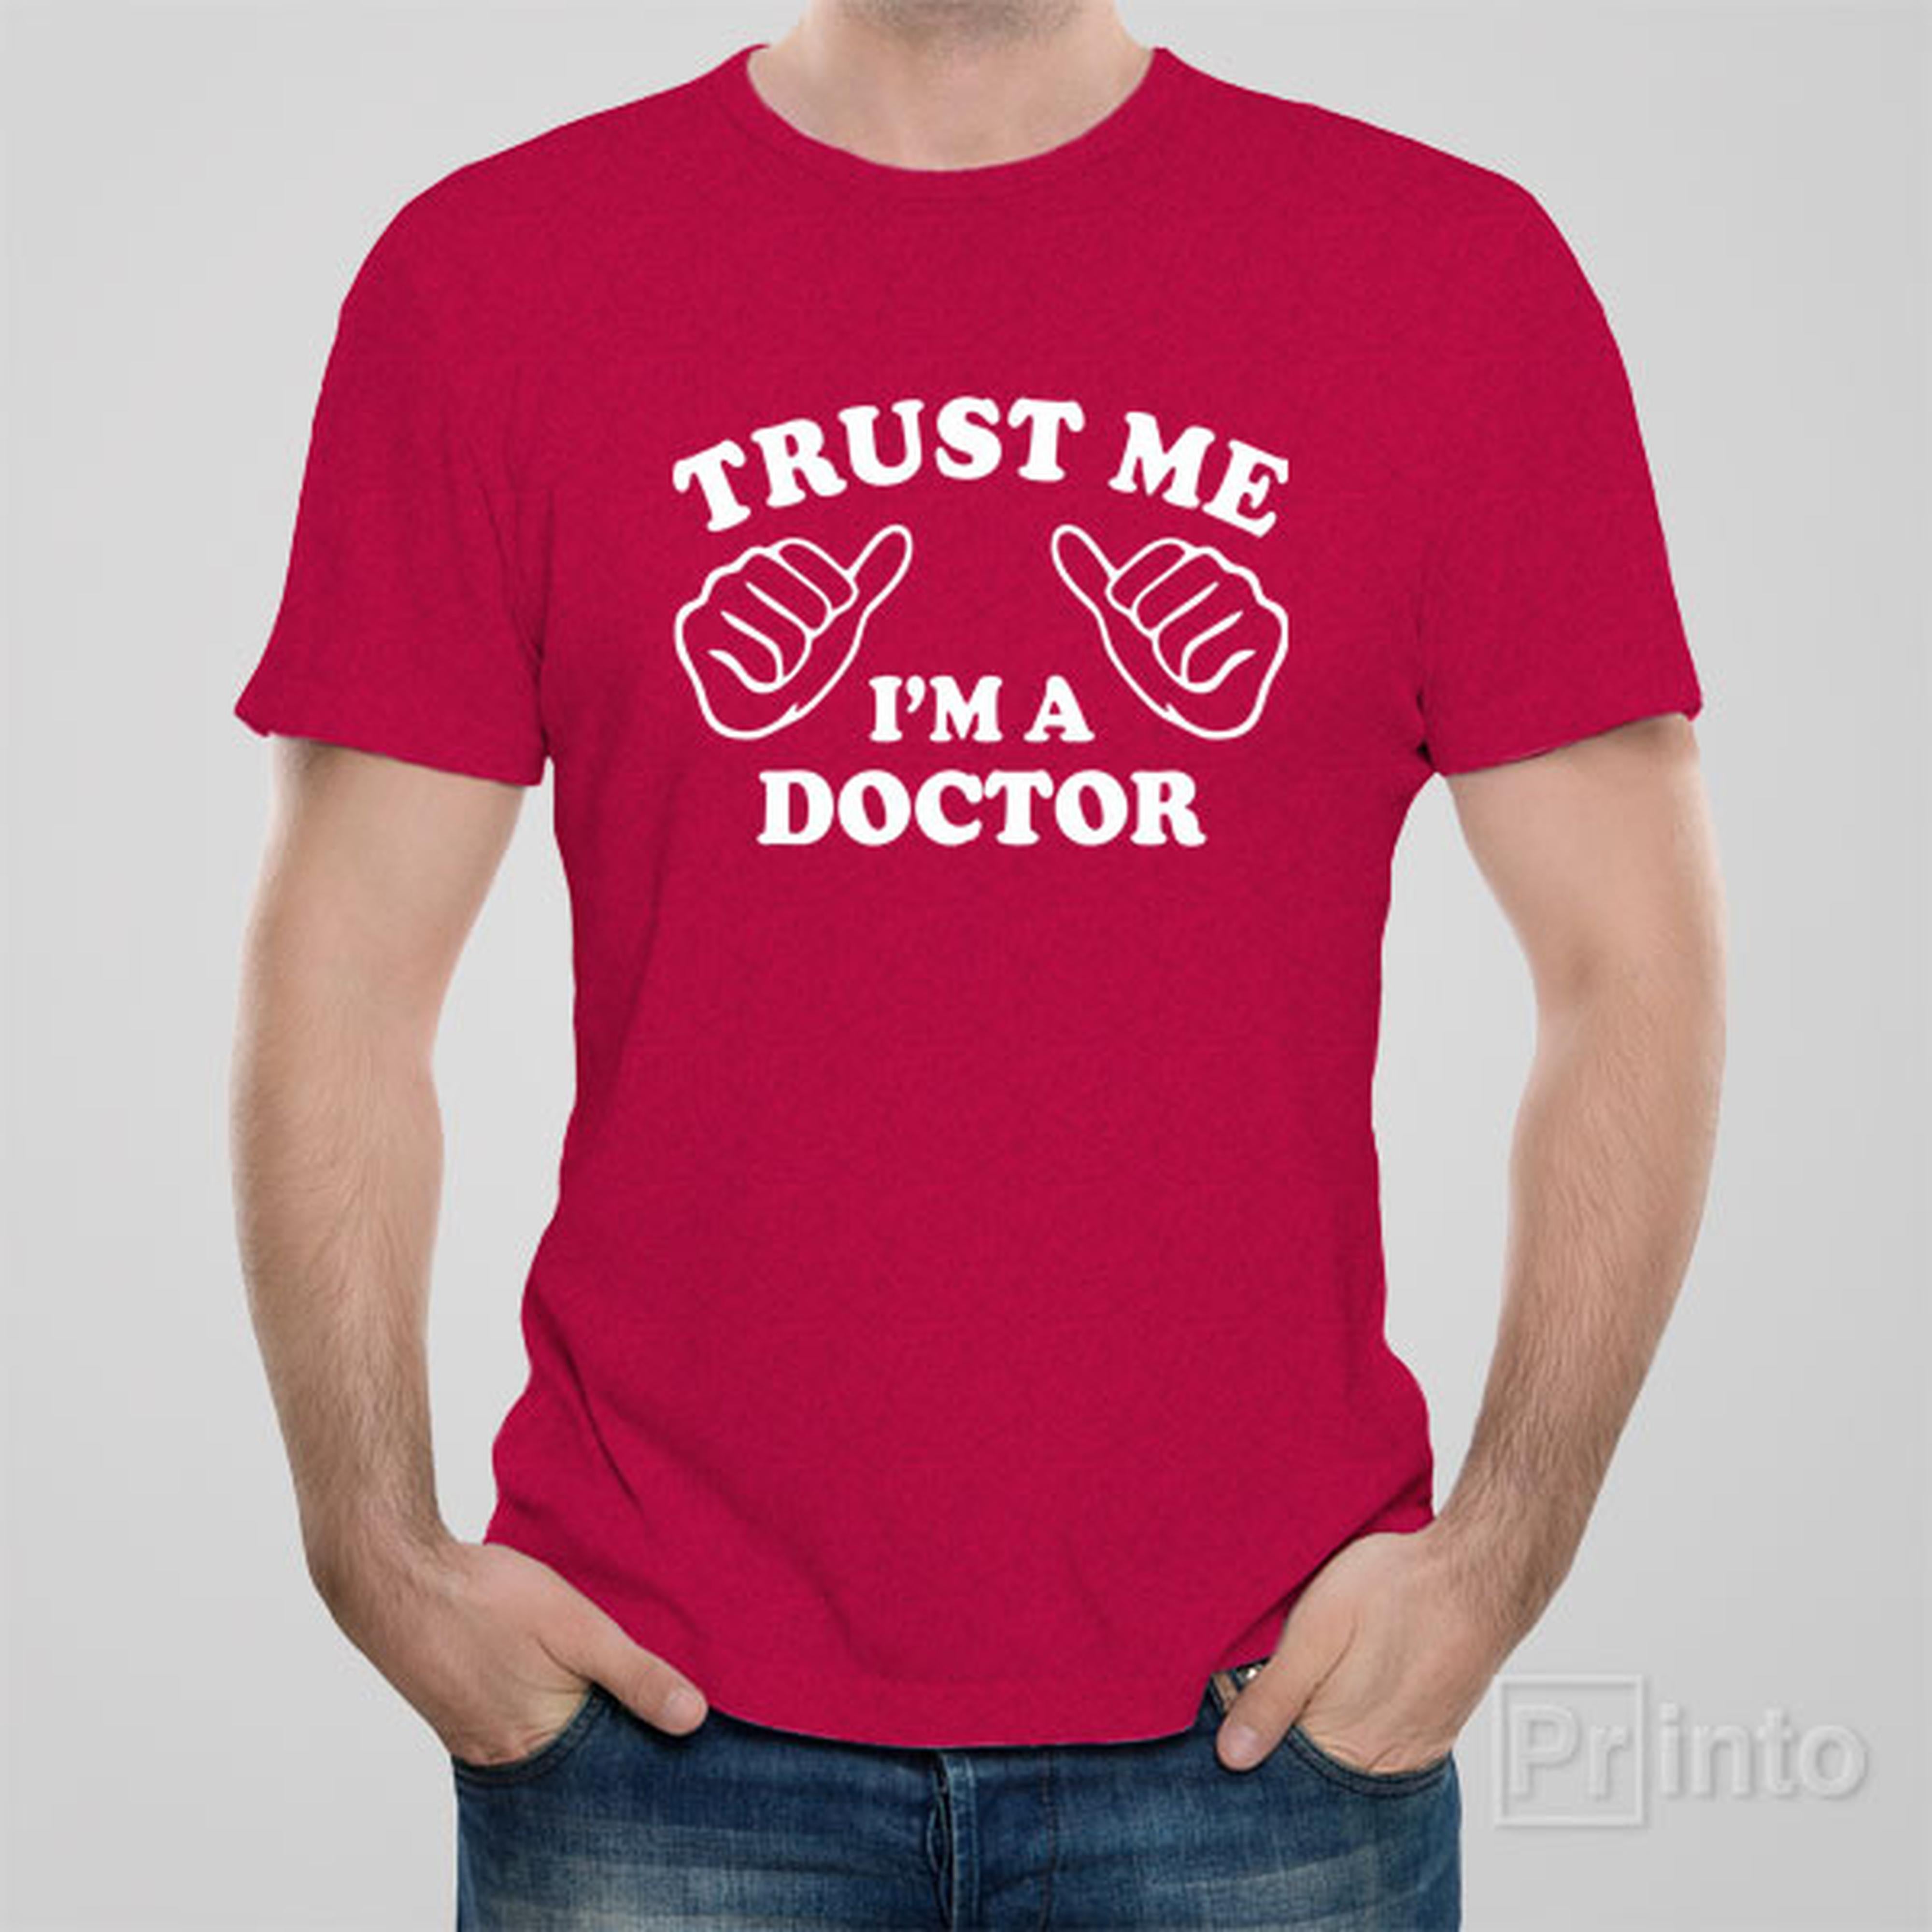 trust-me-i-am-a-doctor-t-shirt